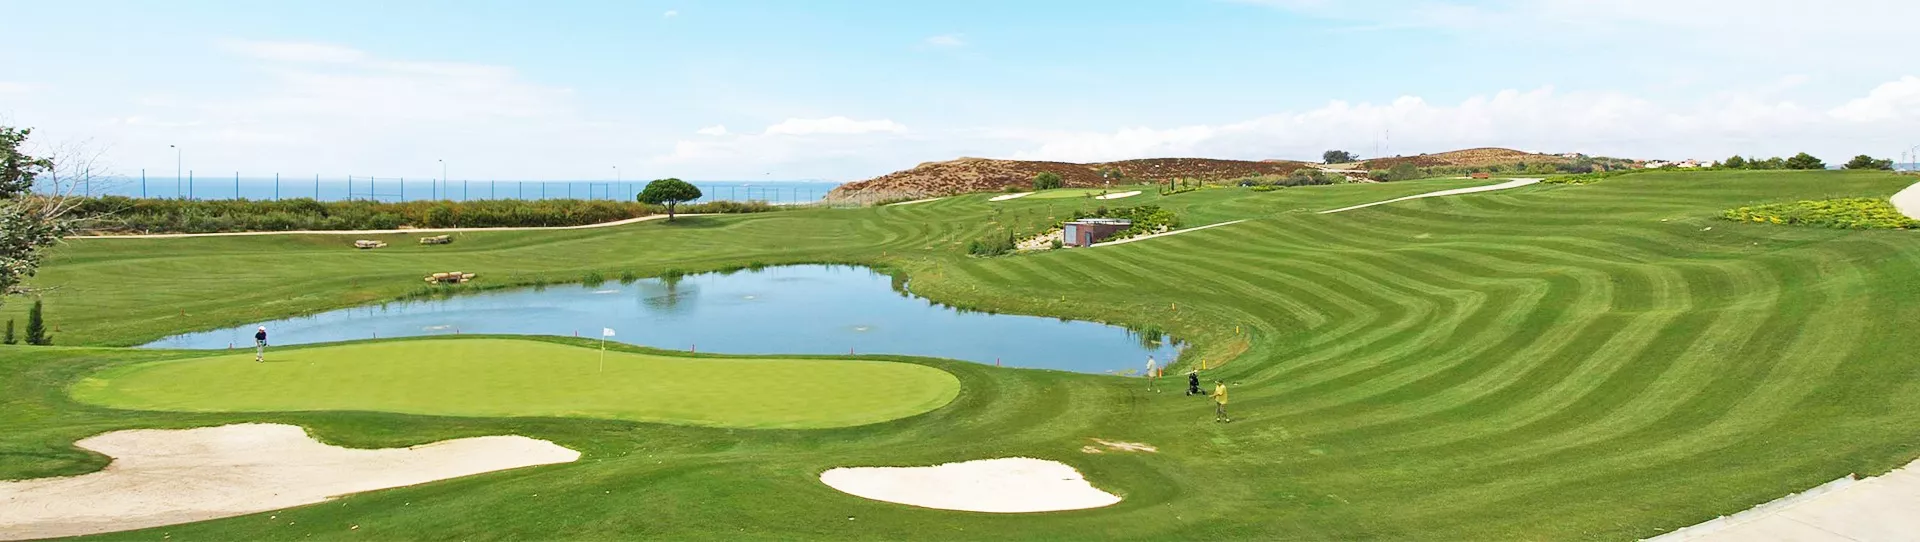 Portugal golf courses - Caparica Golf - Photo 1